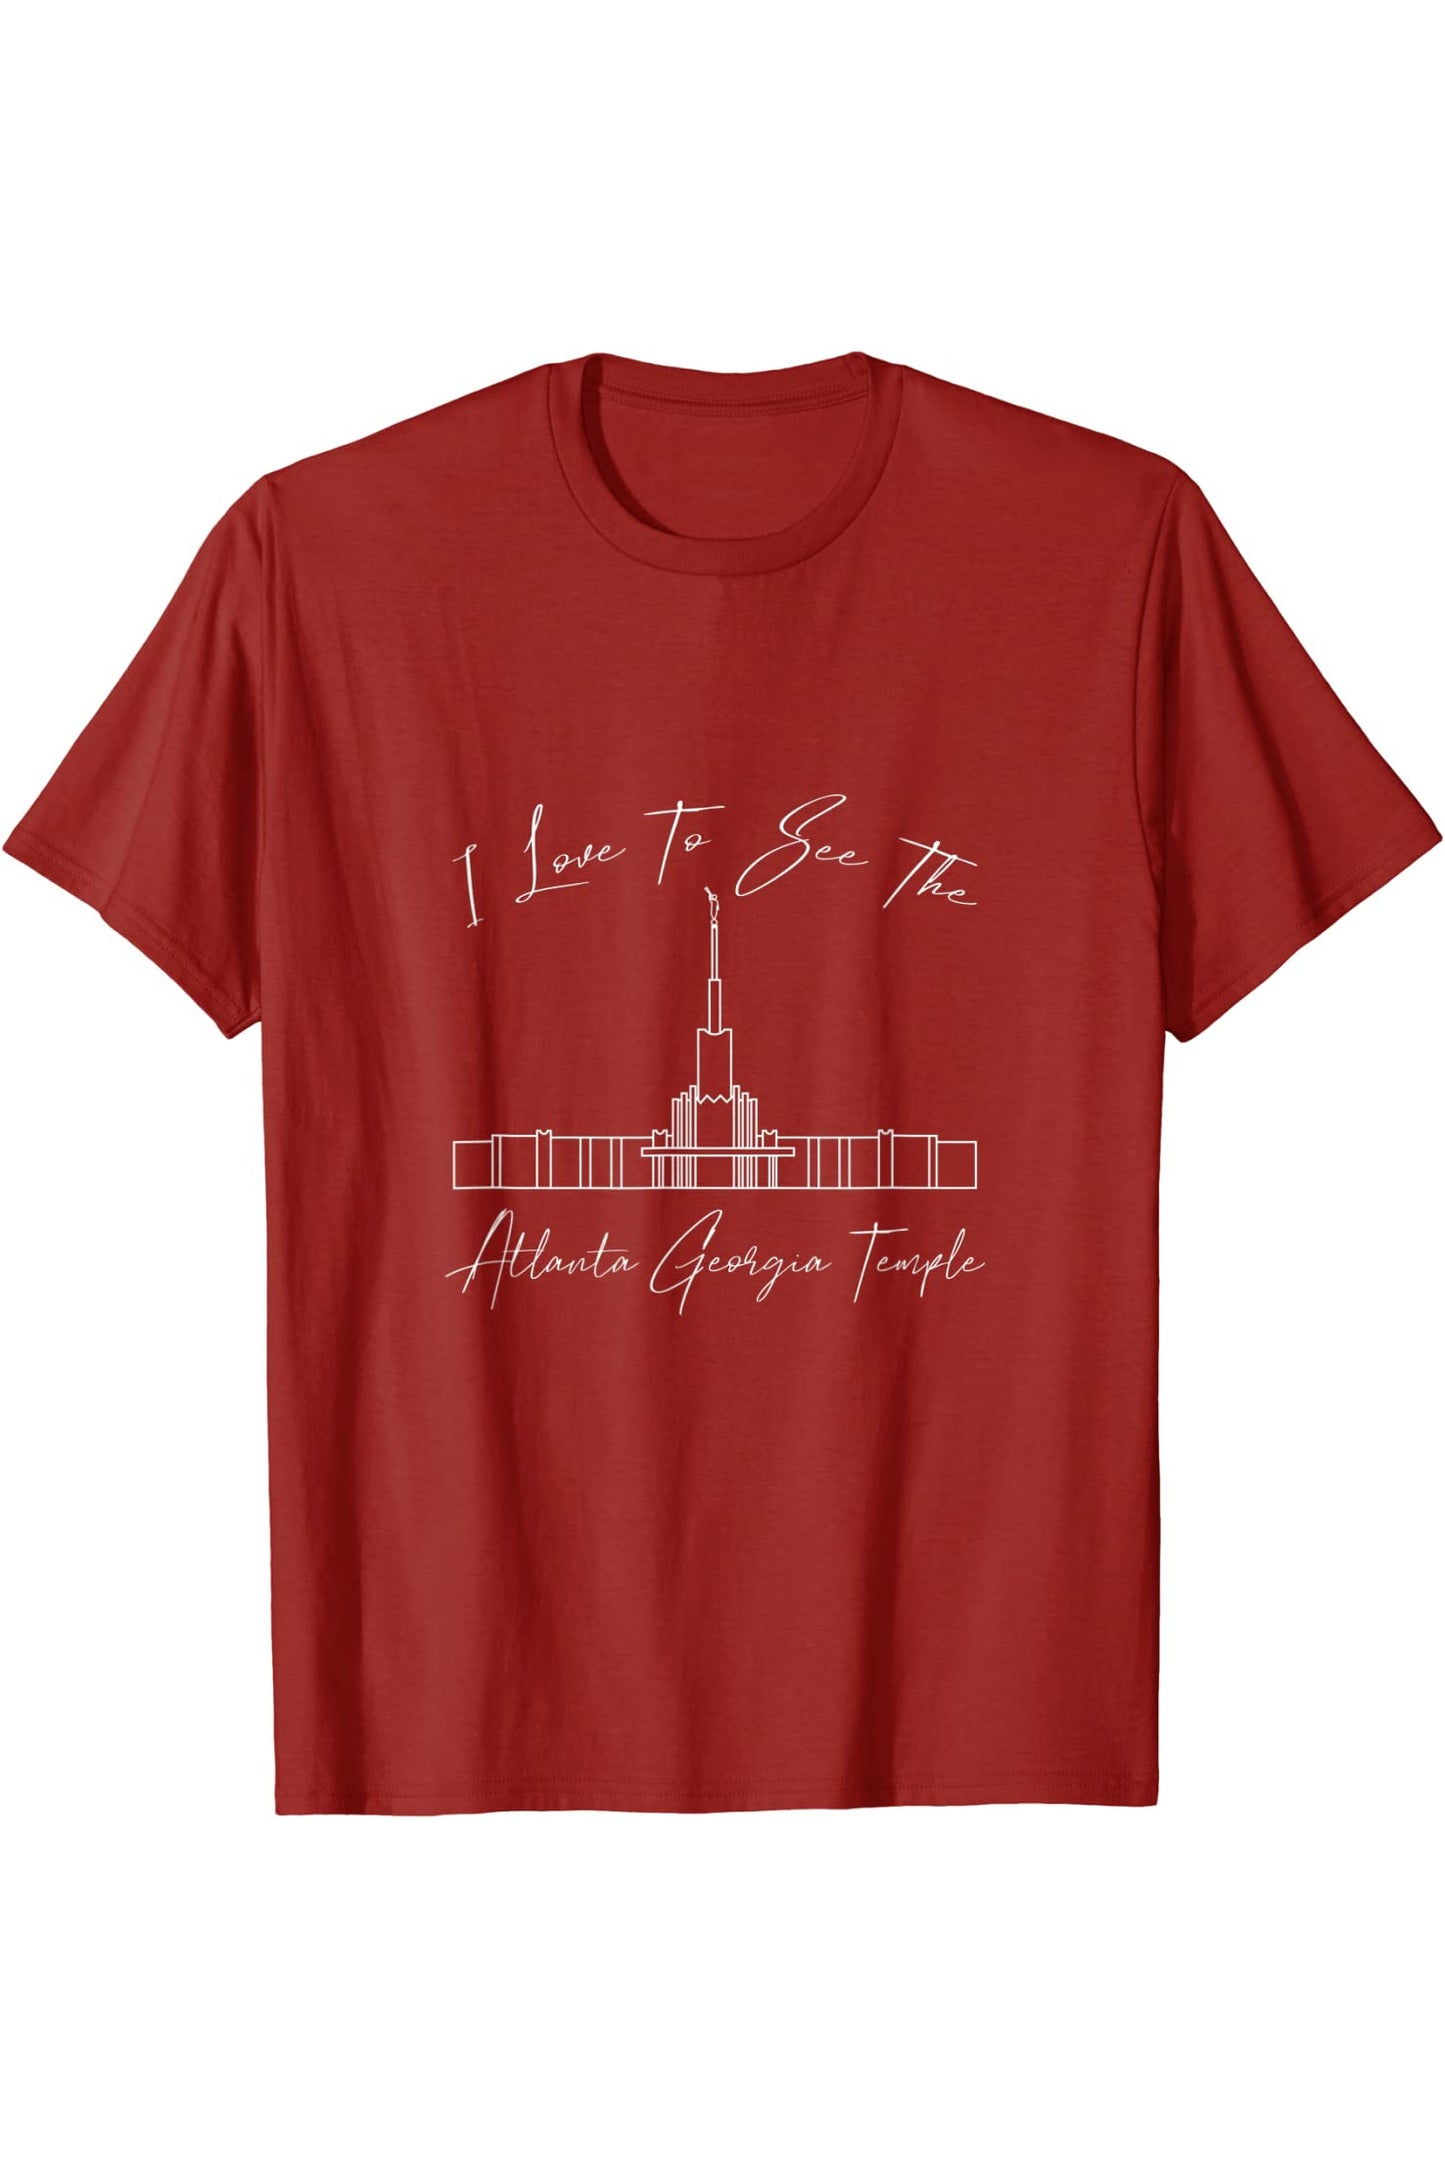 Atlanta Georgia Temple T-Shirt - Calligraphy Style (English) US